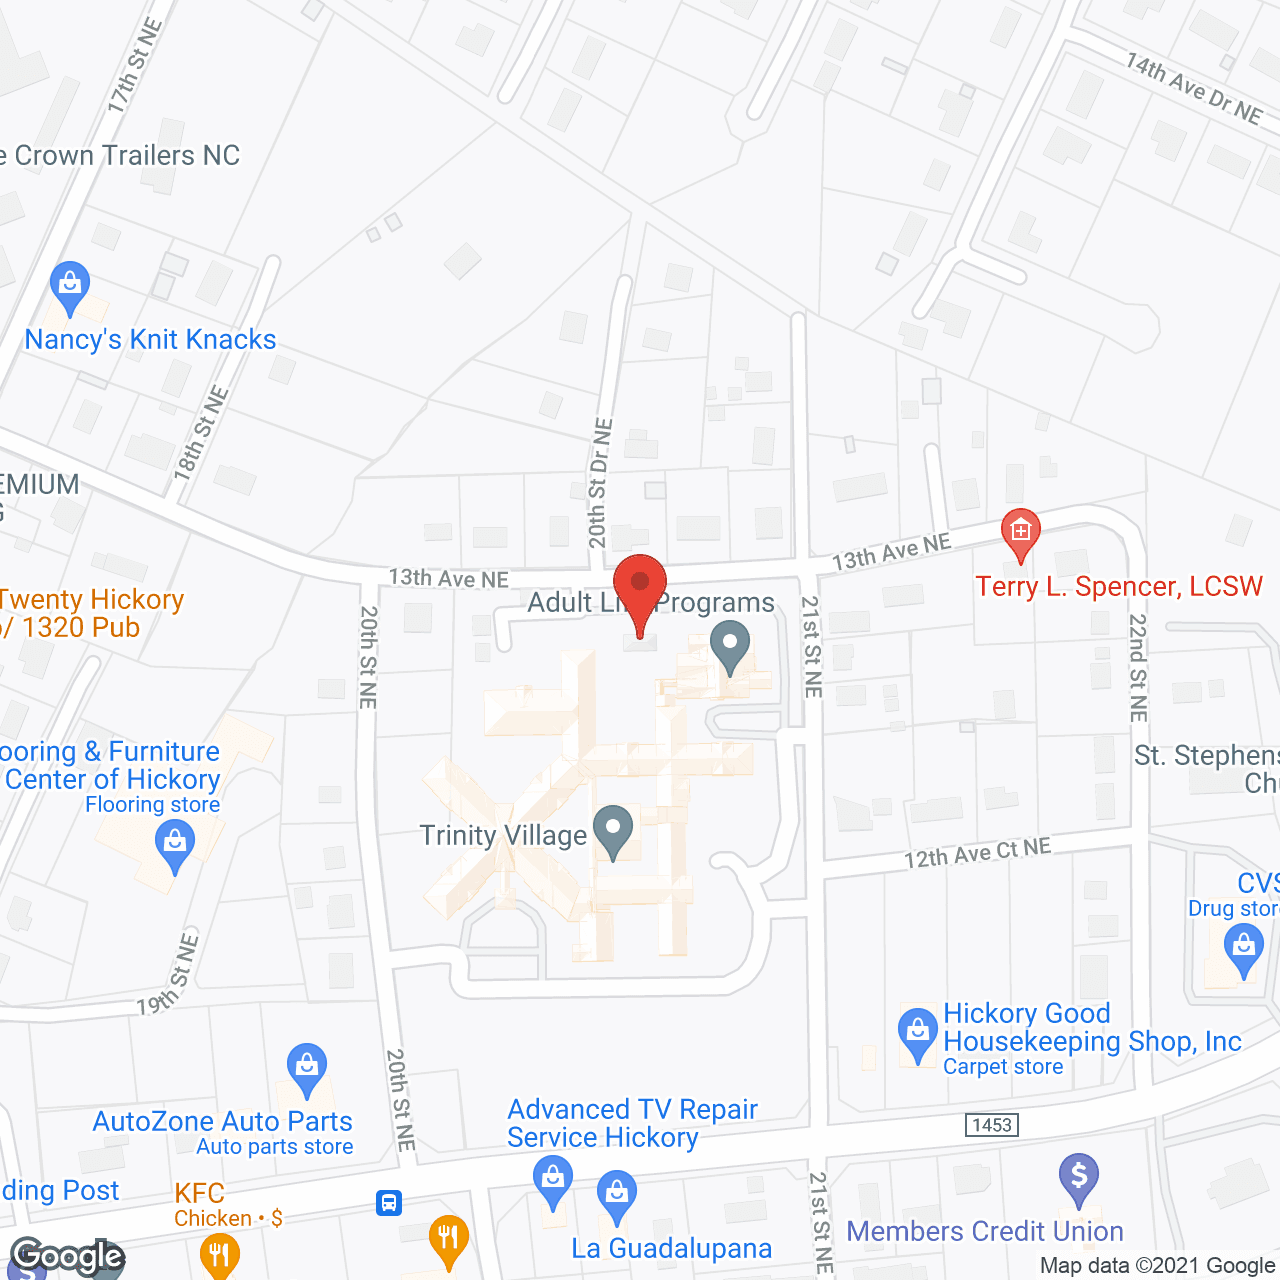 Trinity Village in google map